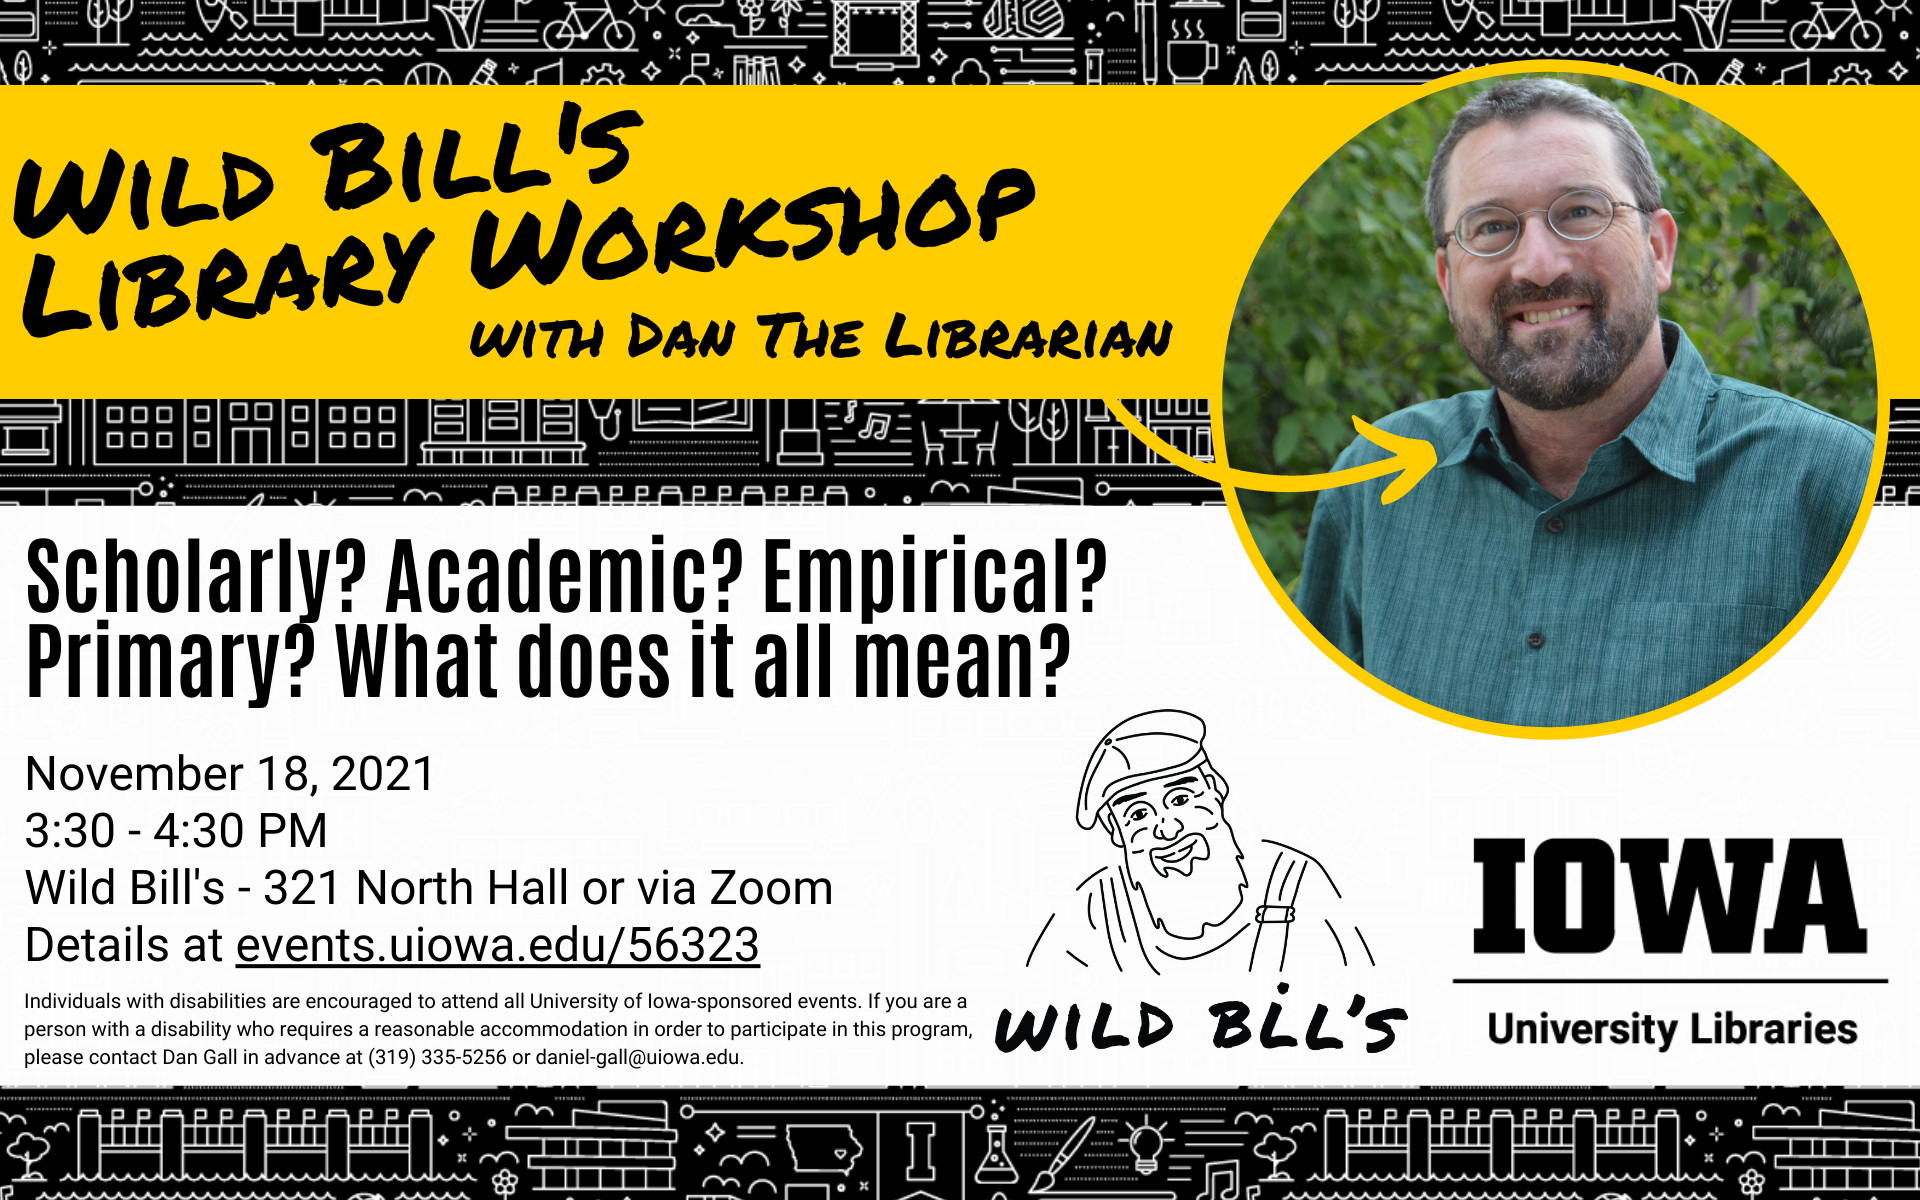 Library Workshop on November 18 in Wild Bill's